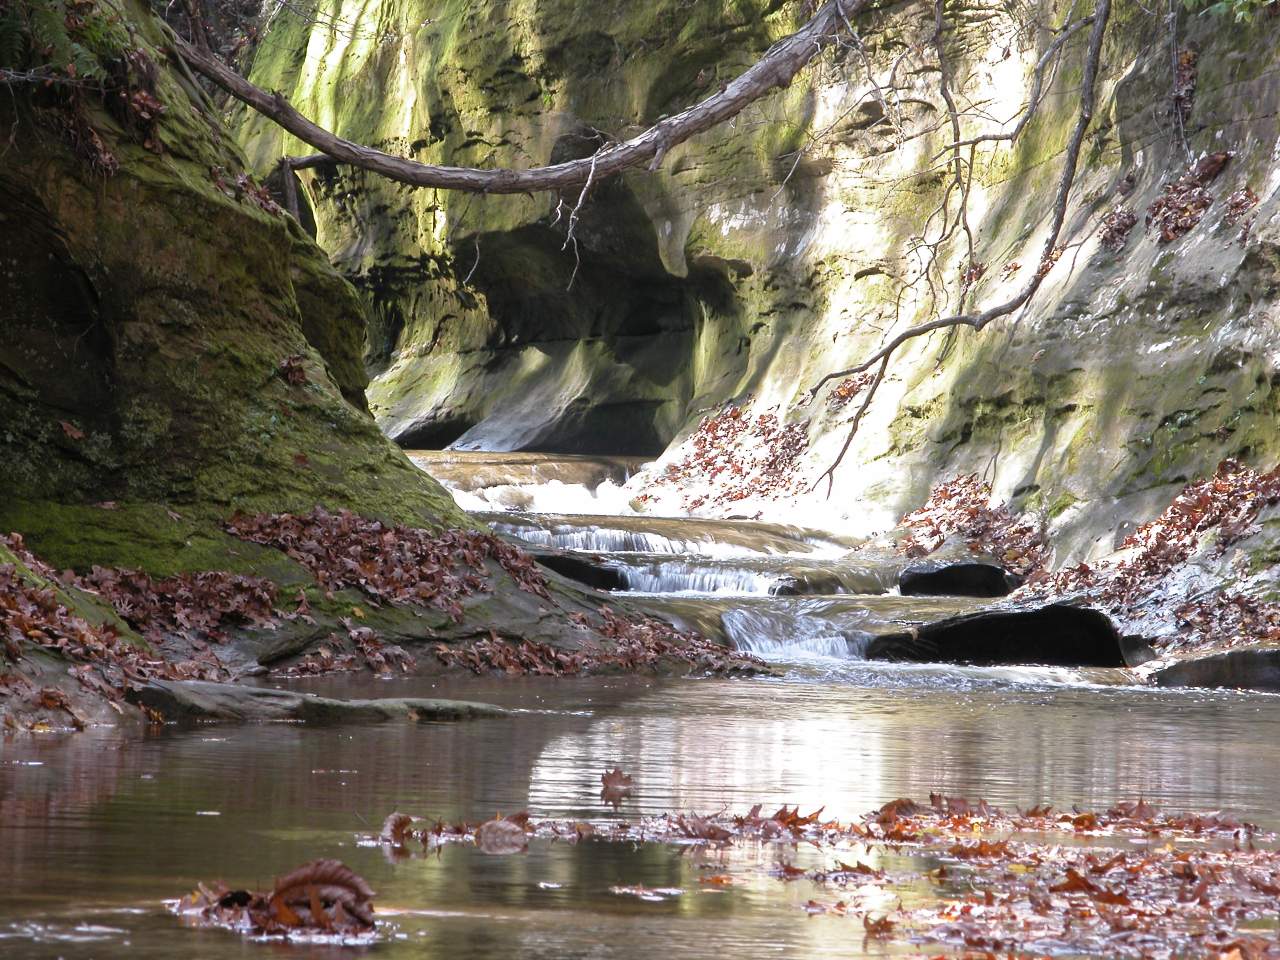 The Fall Creek Gorge